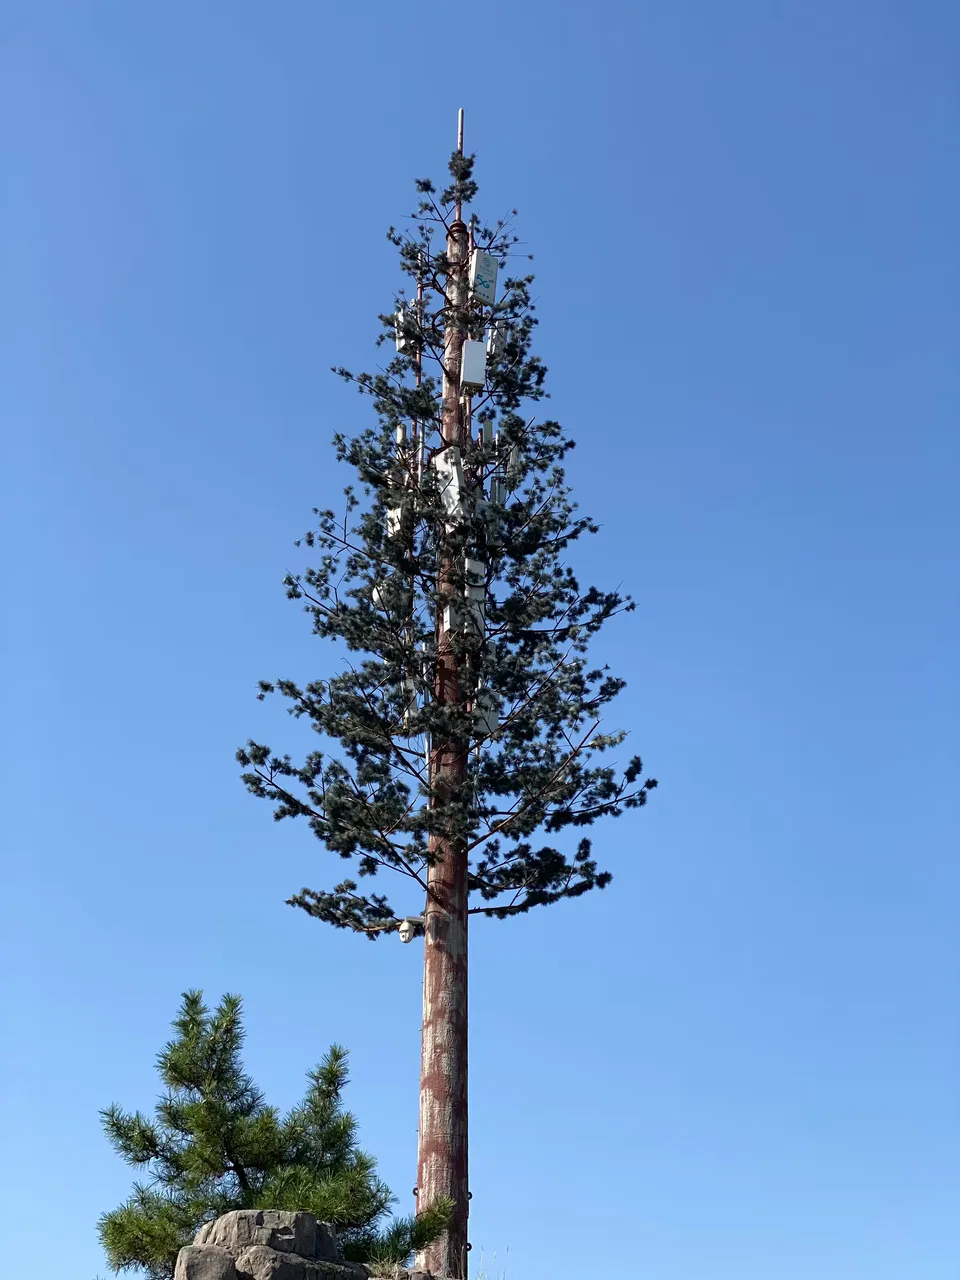 Radio tower disguised as tree